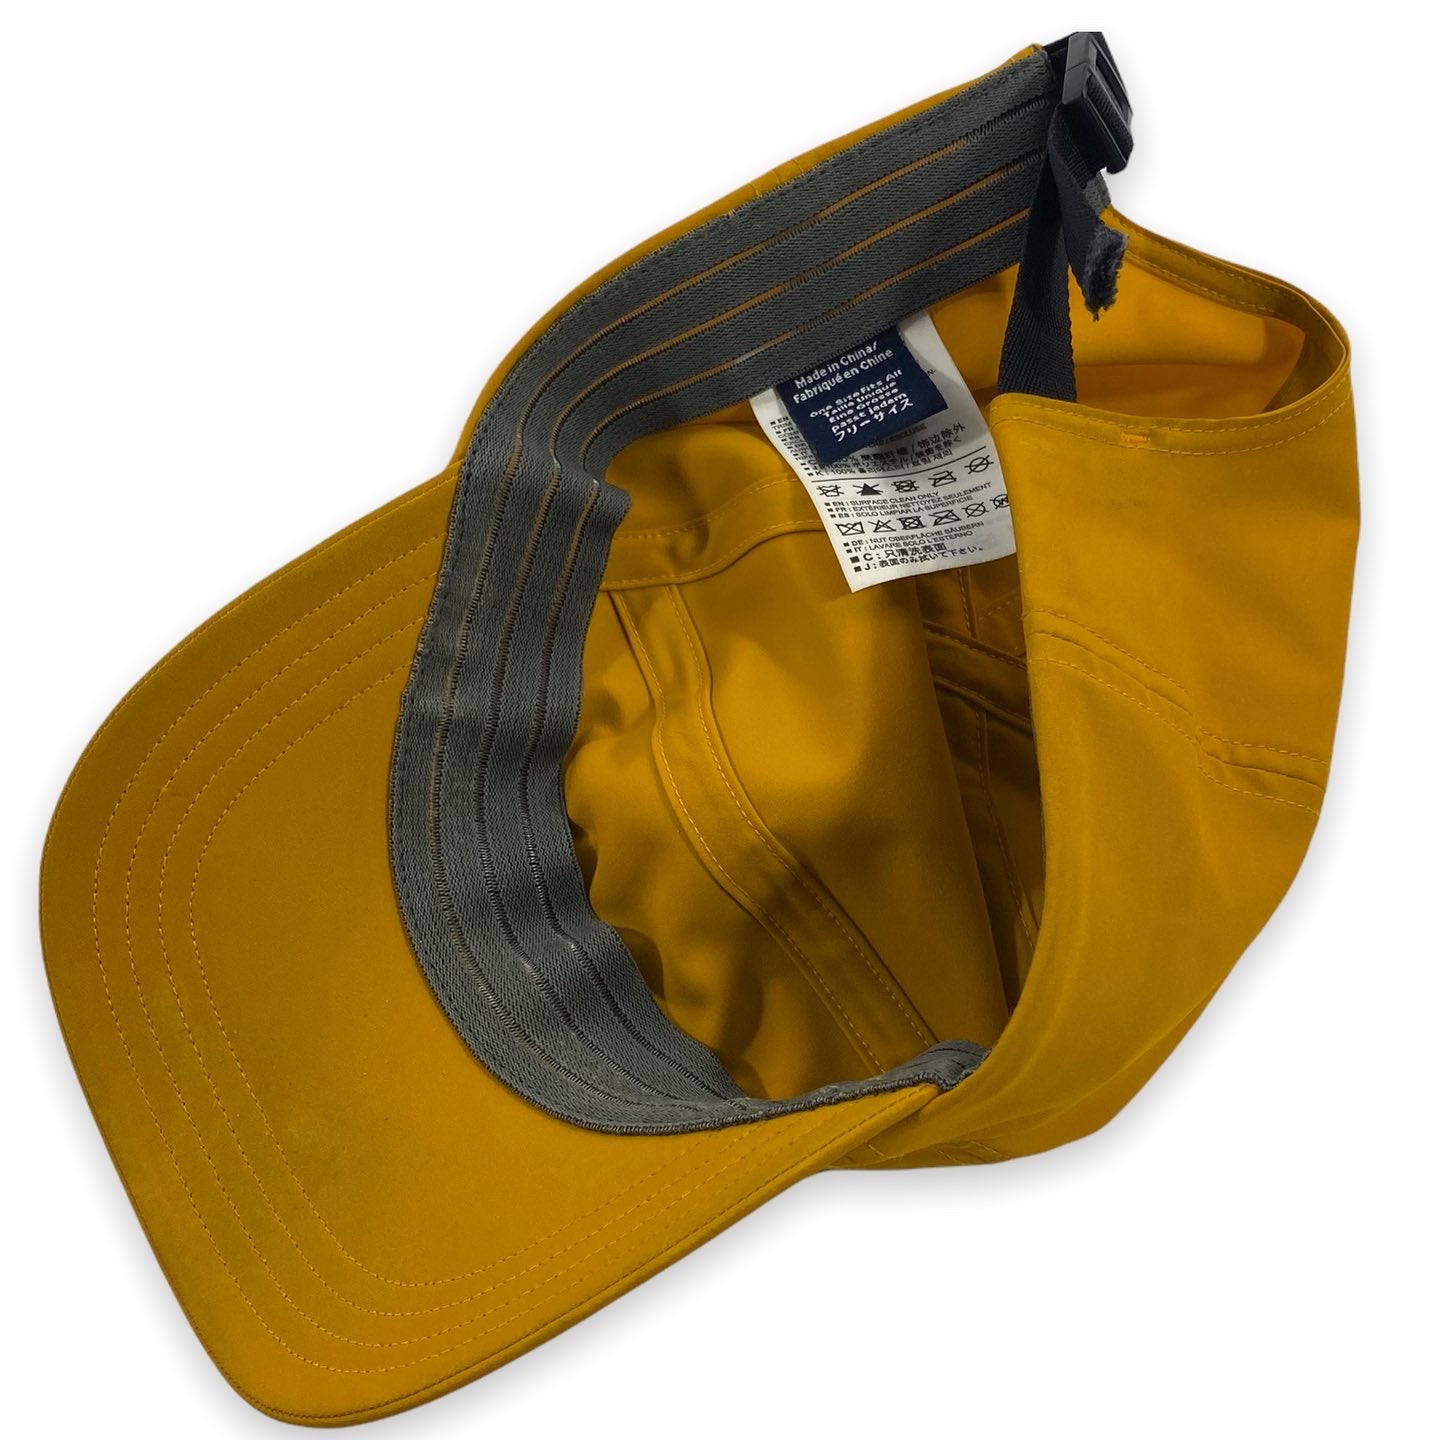 Arcteryx hat – Vintage Sponsor